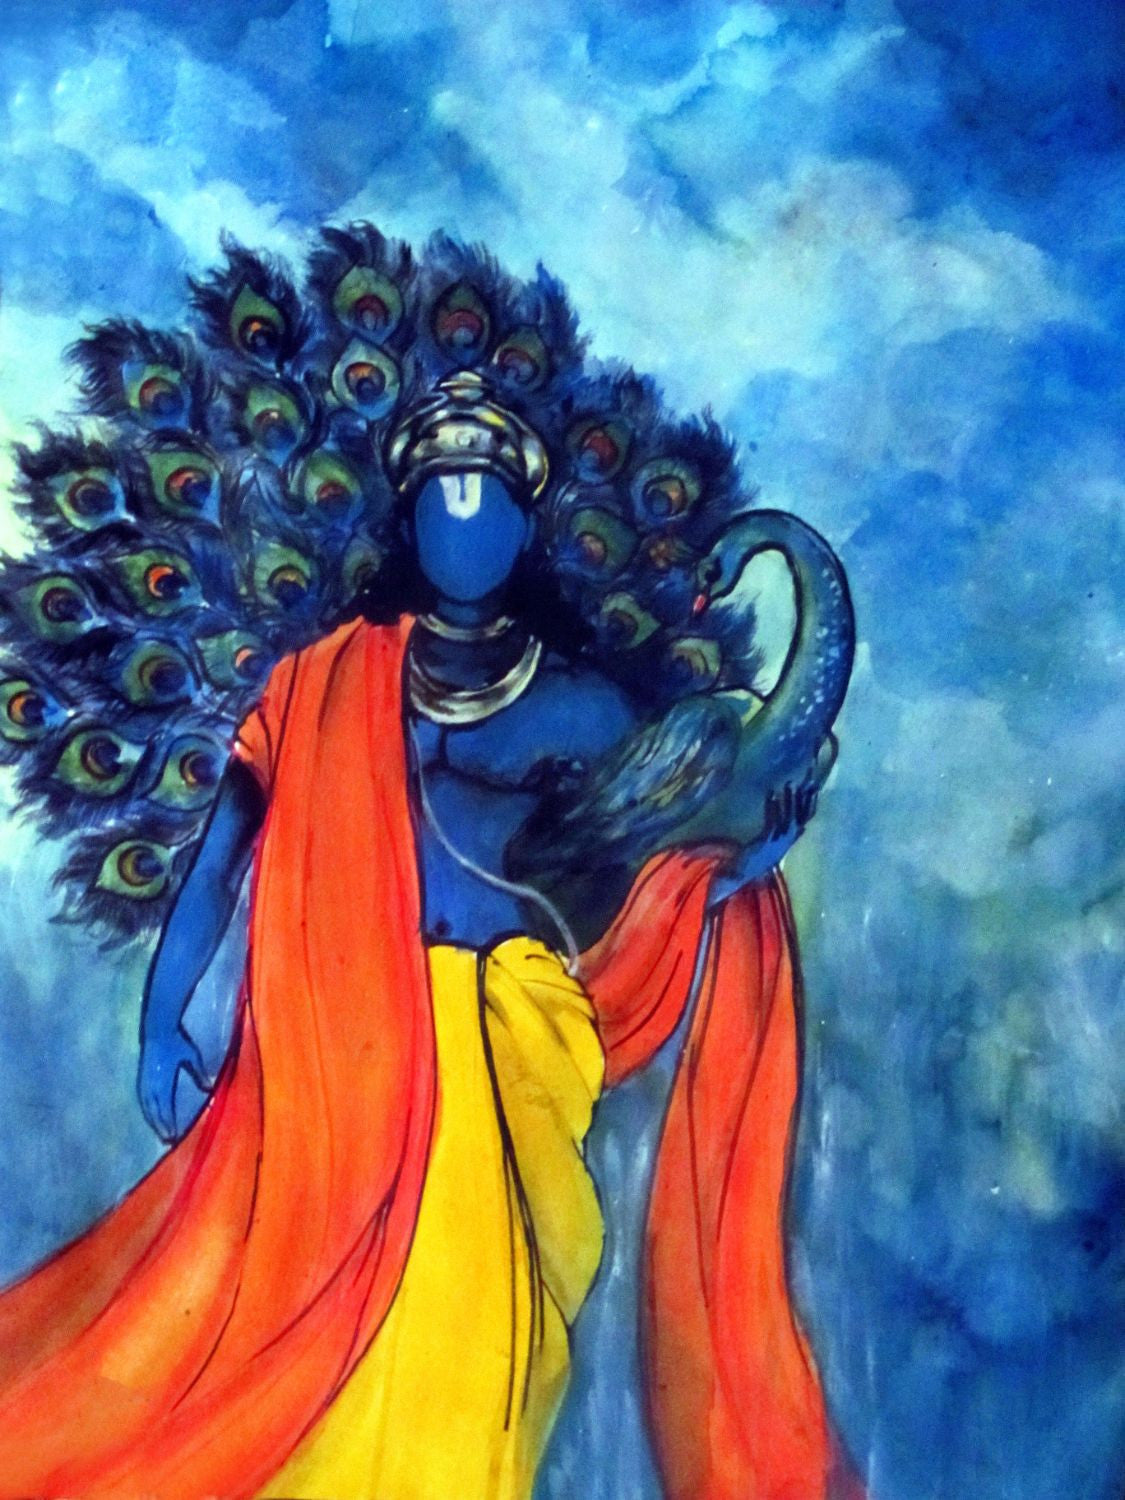 Indian Art - Acrylic Painting - Krishna with Peacock - Art Prints ...